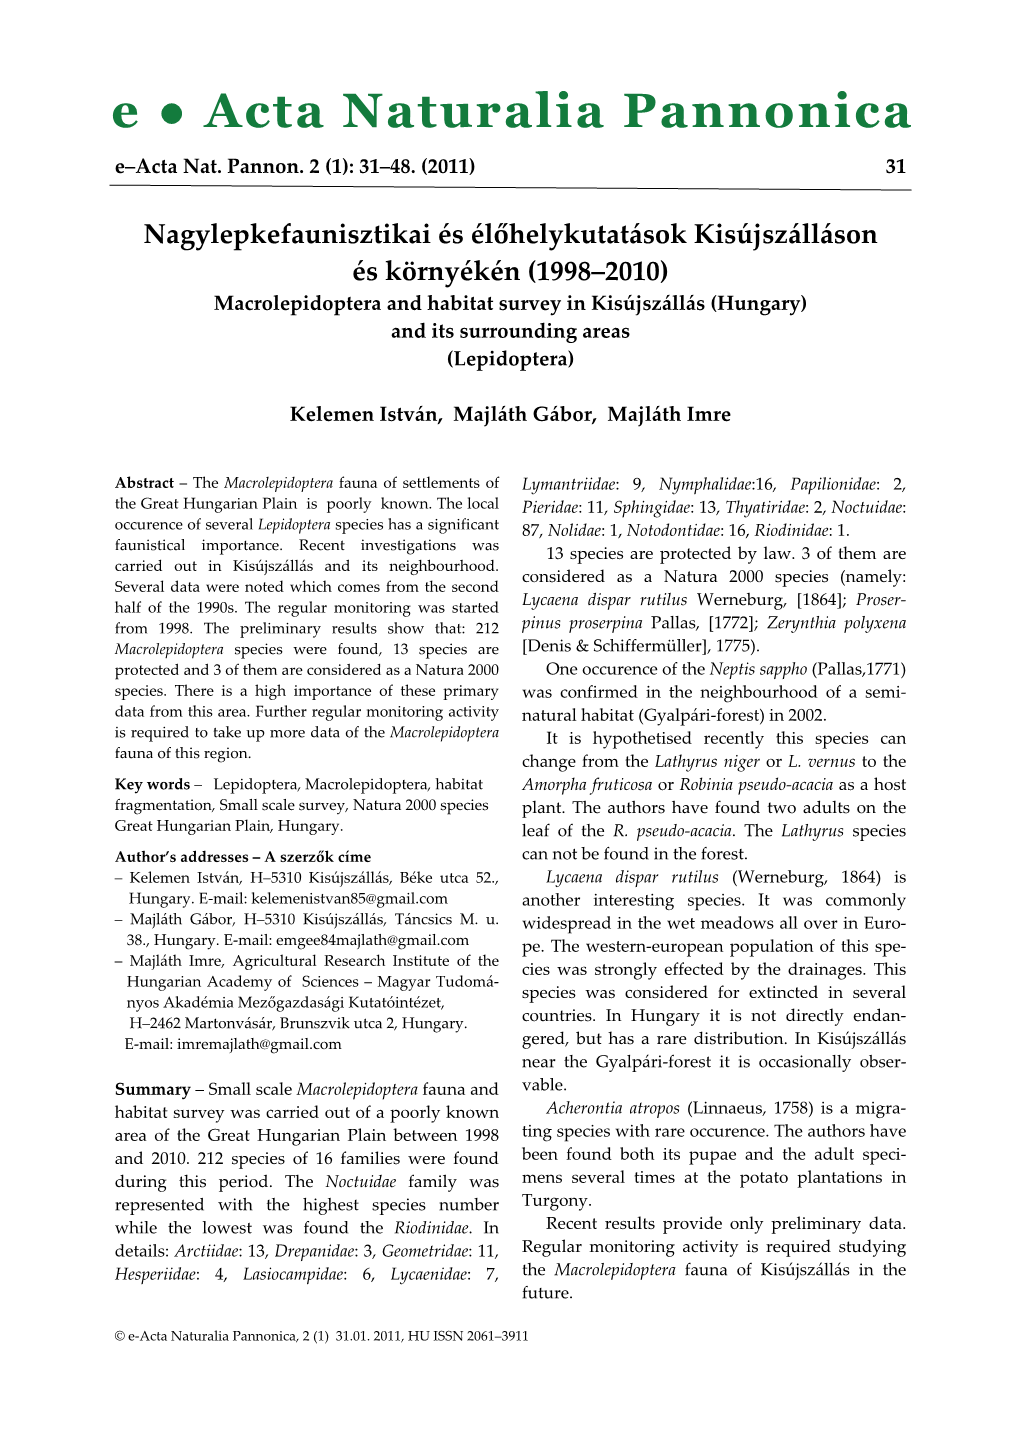 Macrolepidoptera and Habitat Survey in Kisújszállás (Hungary) and Its Surrounding Areas (Lepidoptera)